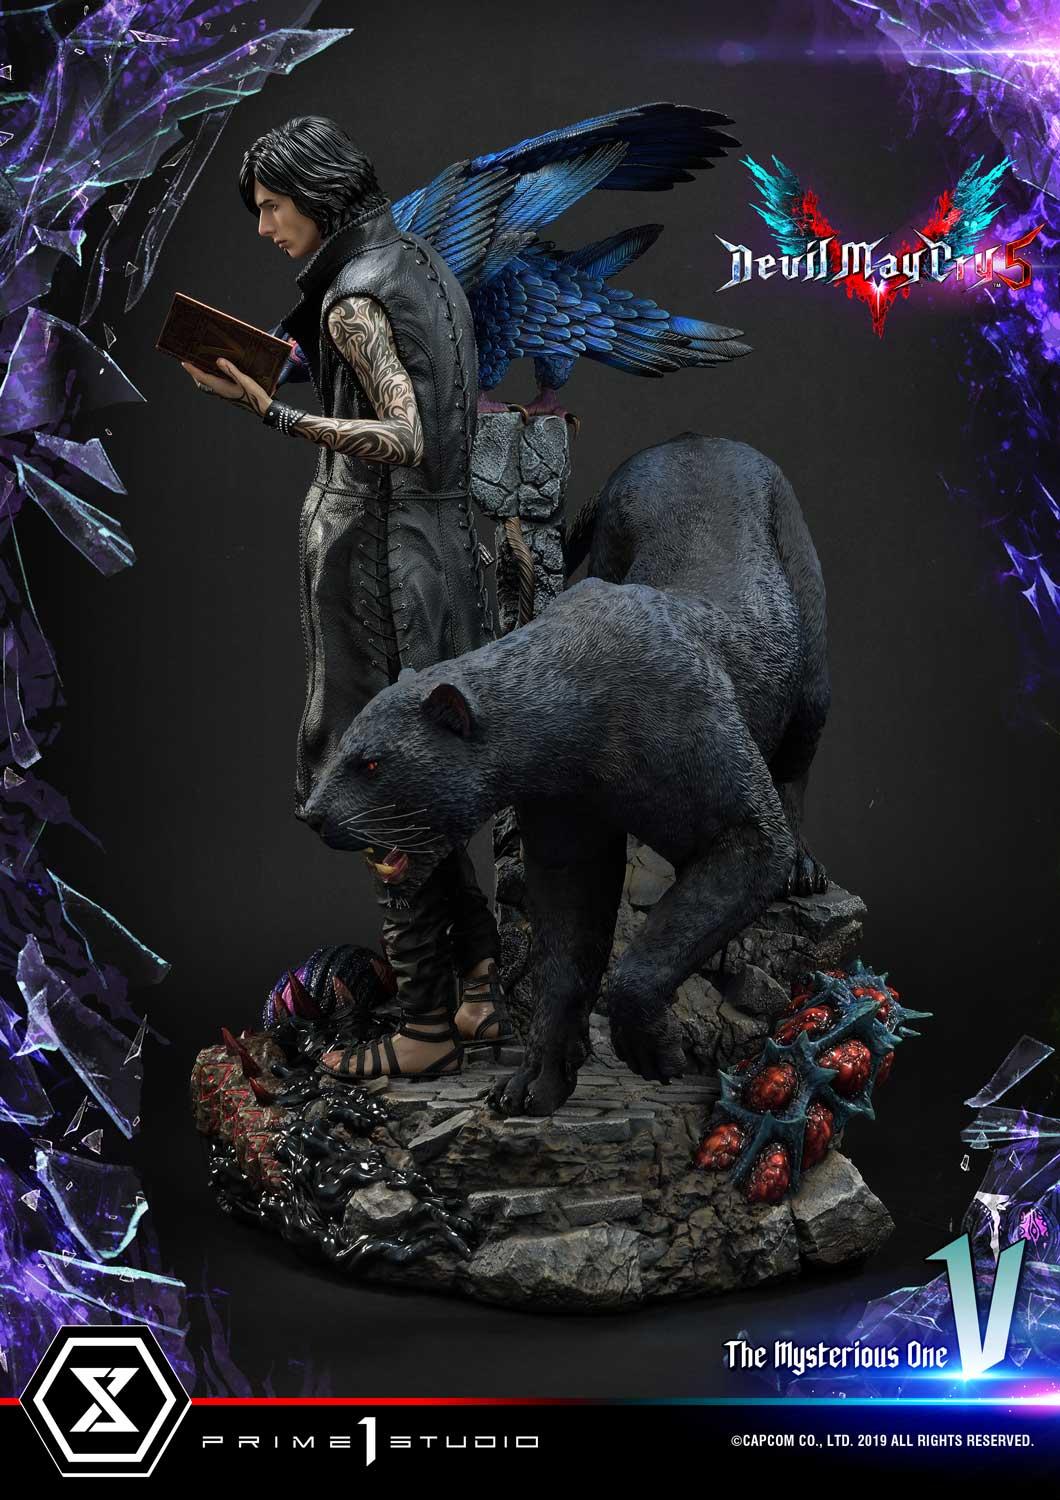 Devil May Cry V - Vergil Statue EX Color Limited Version by Prime 1 Studio  - The Toyark - News